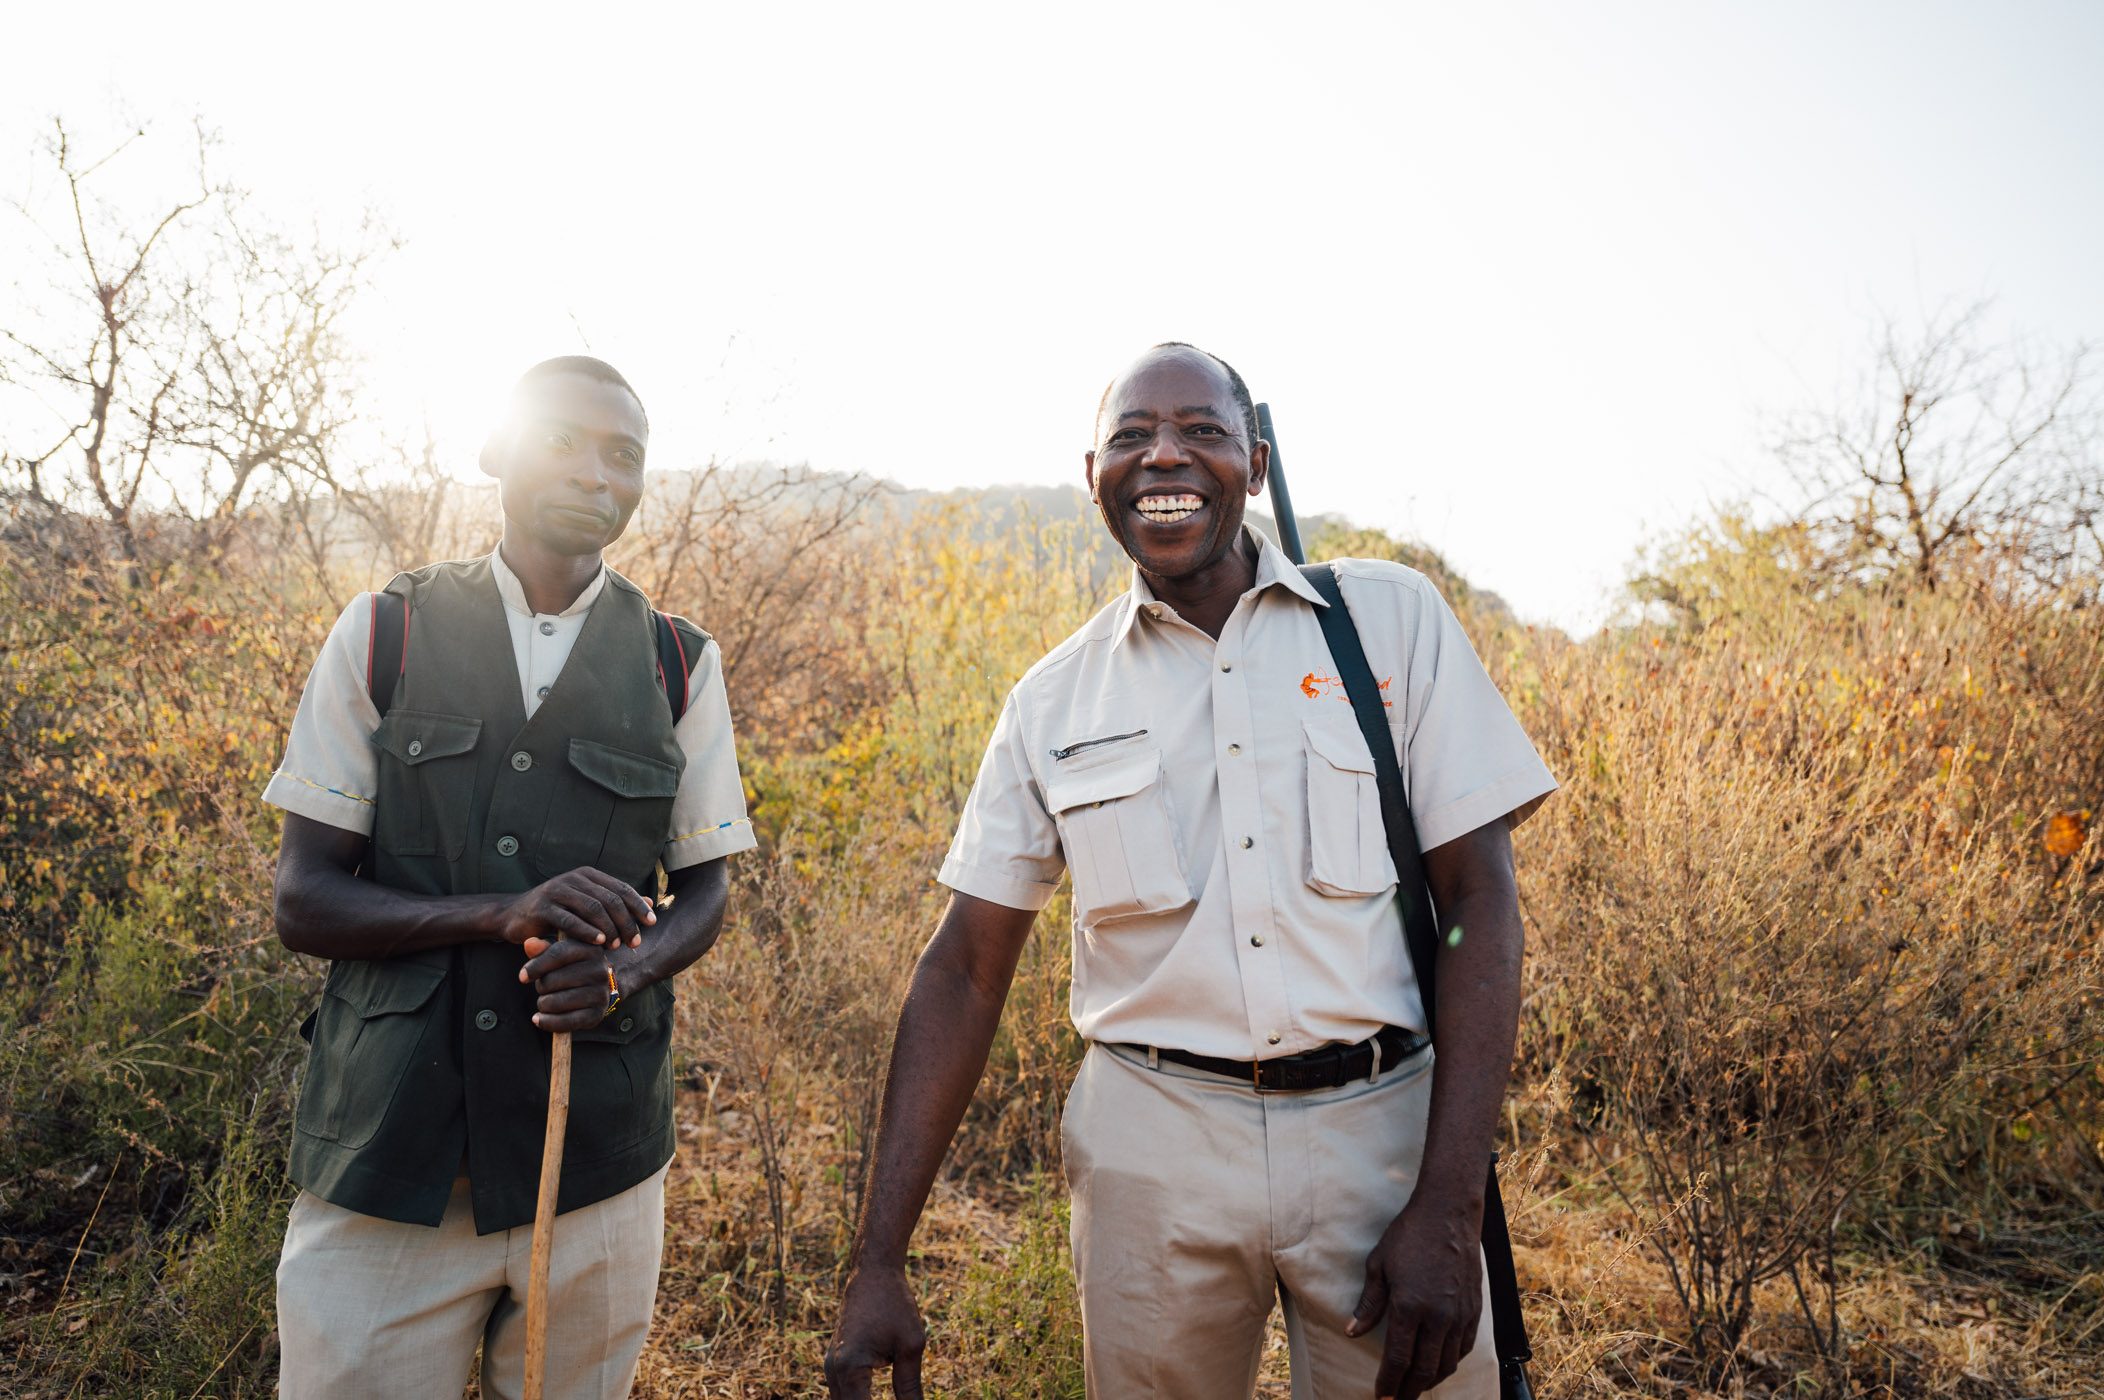 Walking safaris in the Mbulia conservancy